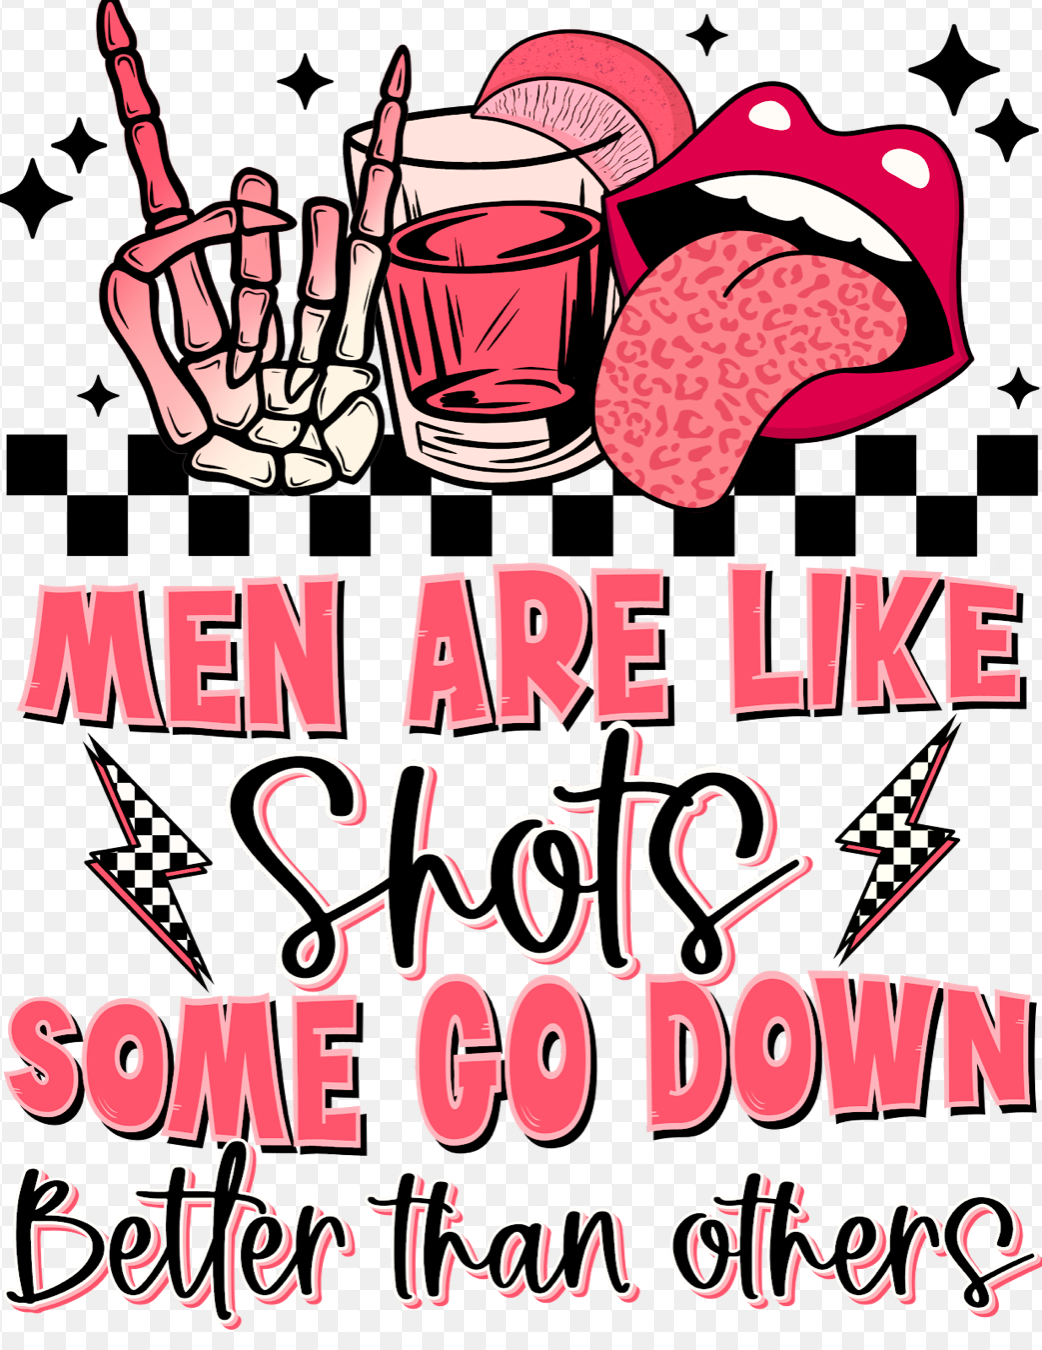 Men are like shots